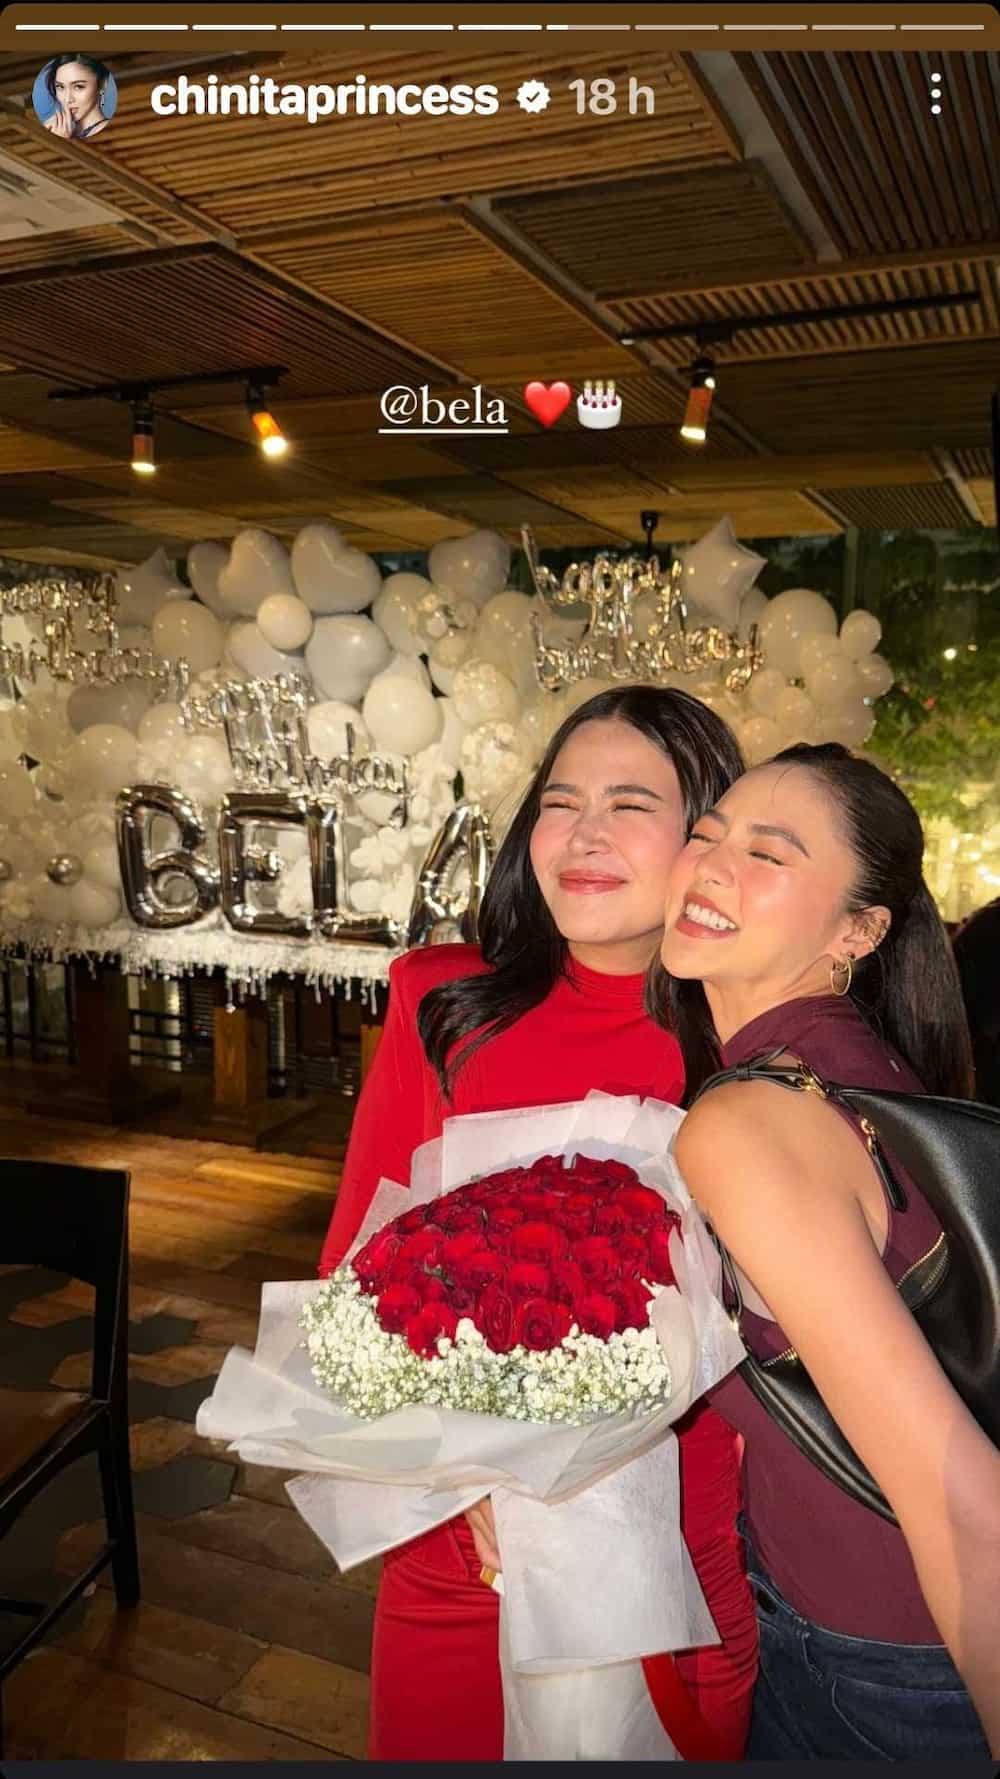 Glimpses of Bela Padilla's fun birthday party go viral